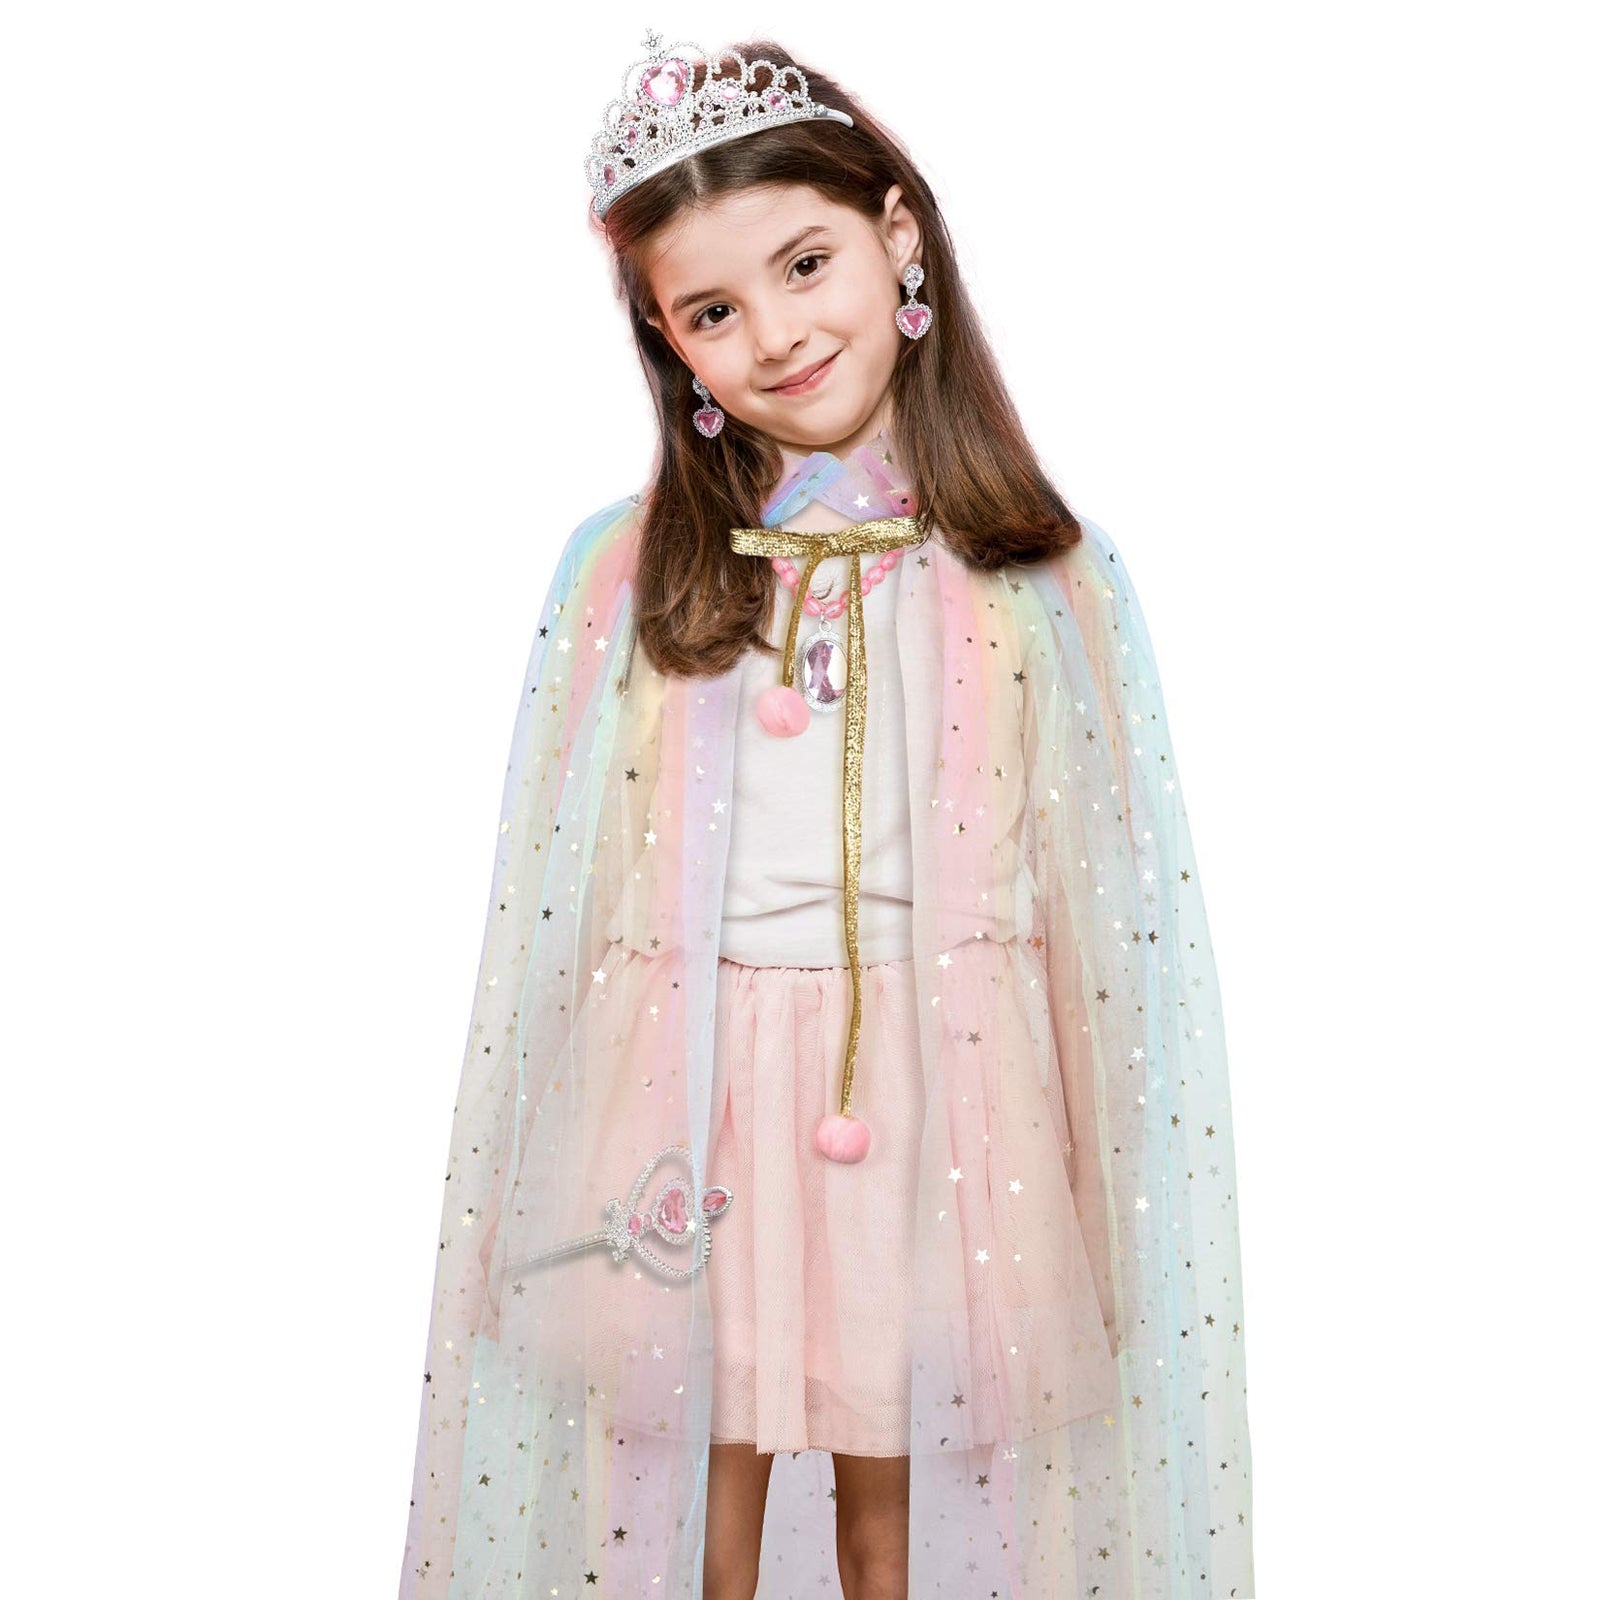 fedio Princess Cape Set 7 Pieces Girls Princess Cloak with Tiara Crown, Wand for Little Girls Dress up